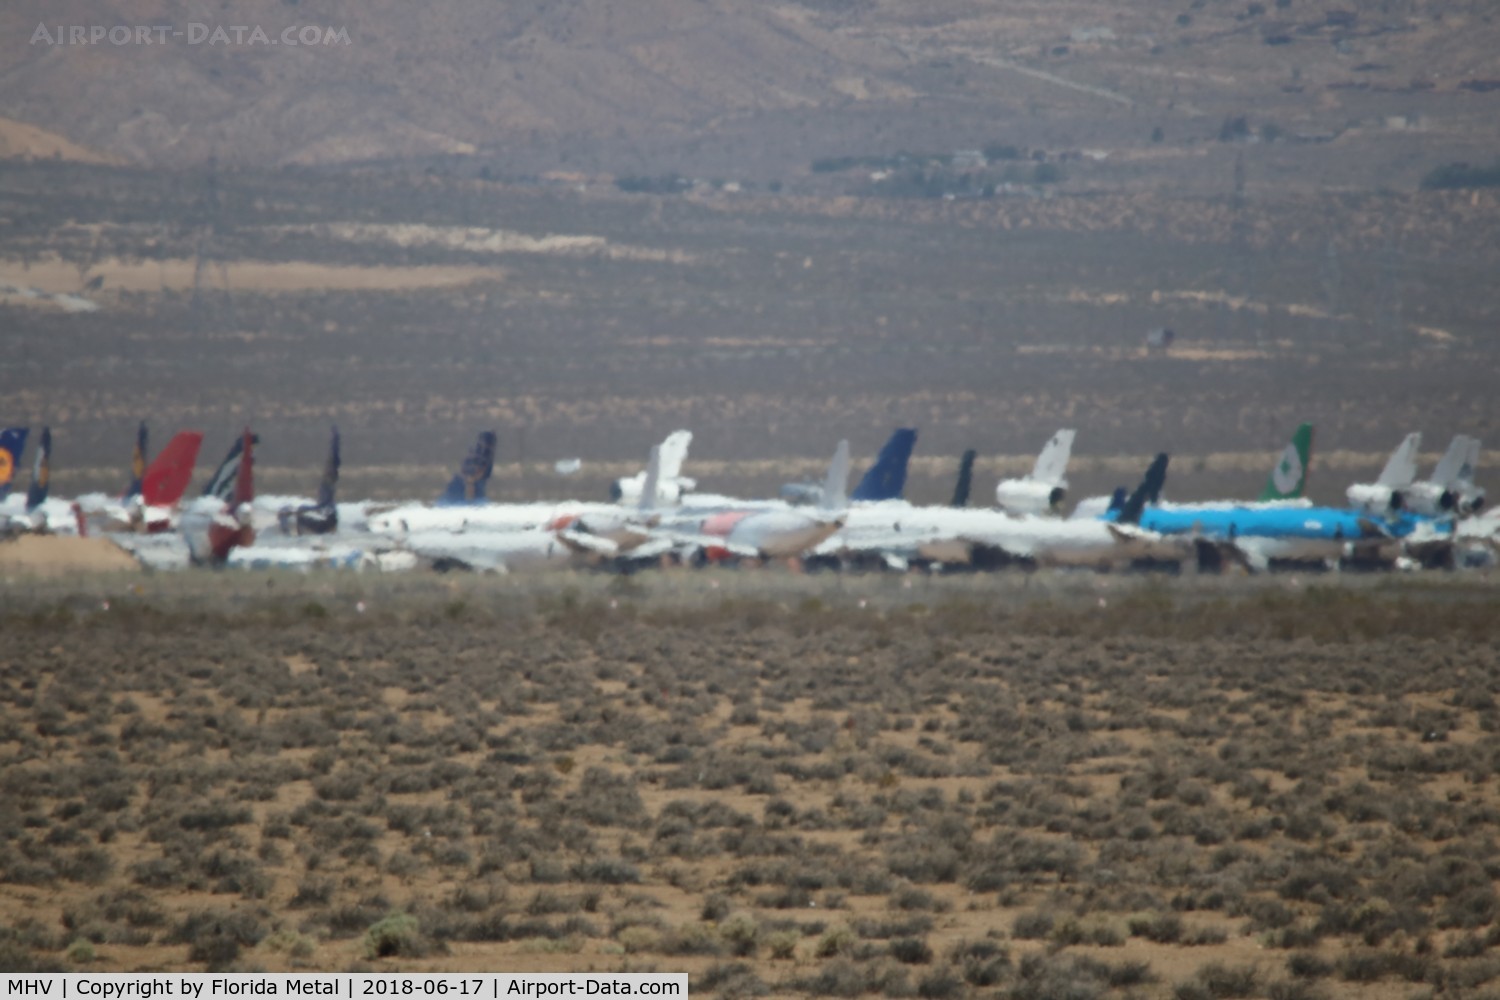 Mojave Airport (MHV) - Mojave